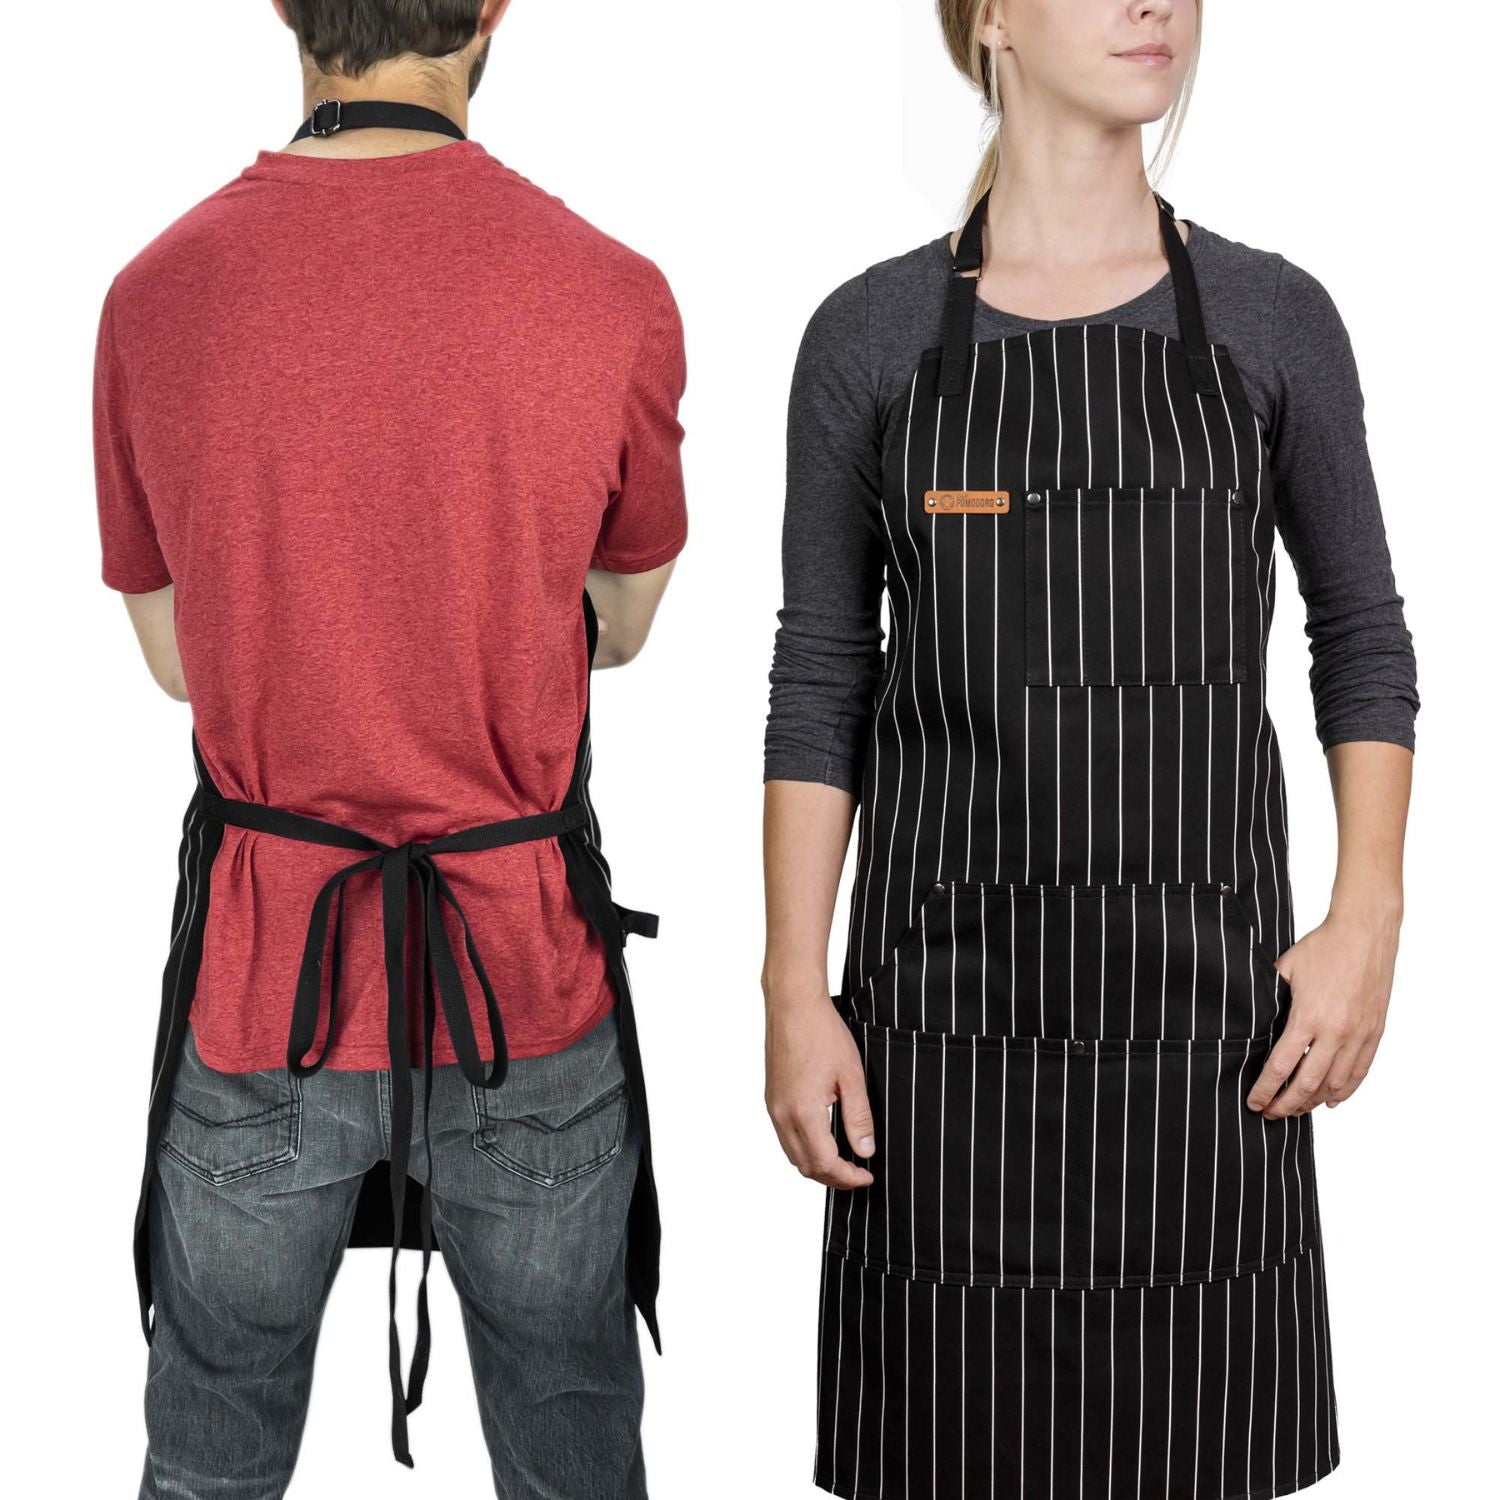 Chef pomodoro adjustable kitchen apron